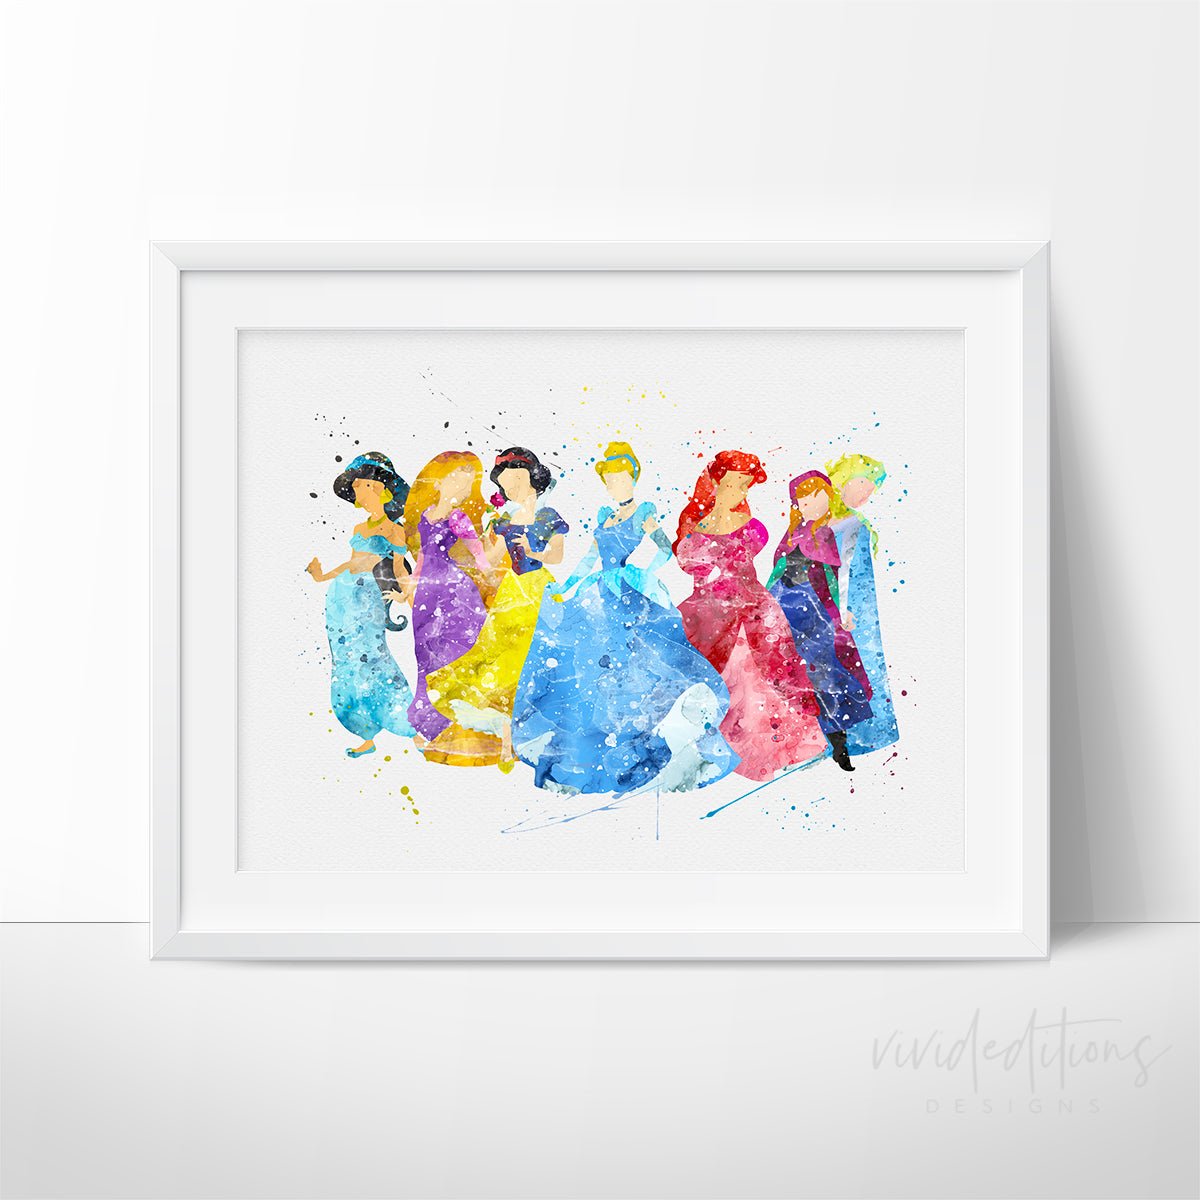 Disney Princesses Watercolor Art Print Print - VividEditions